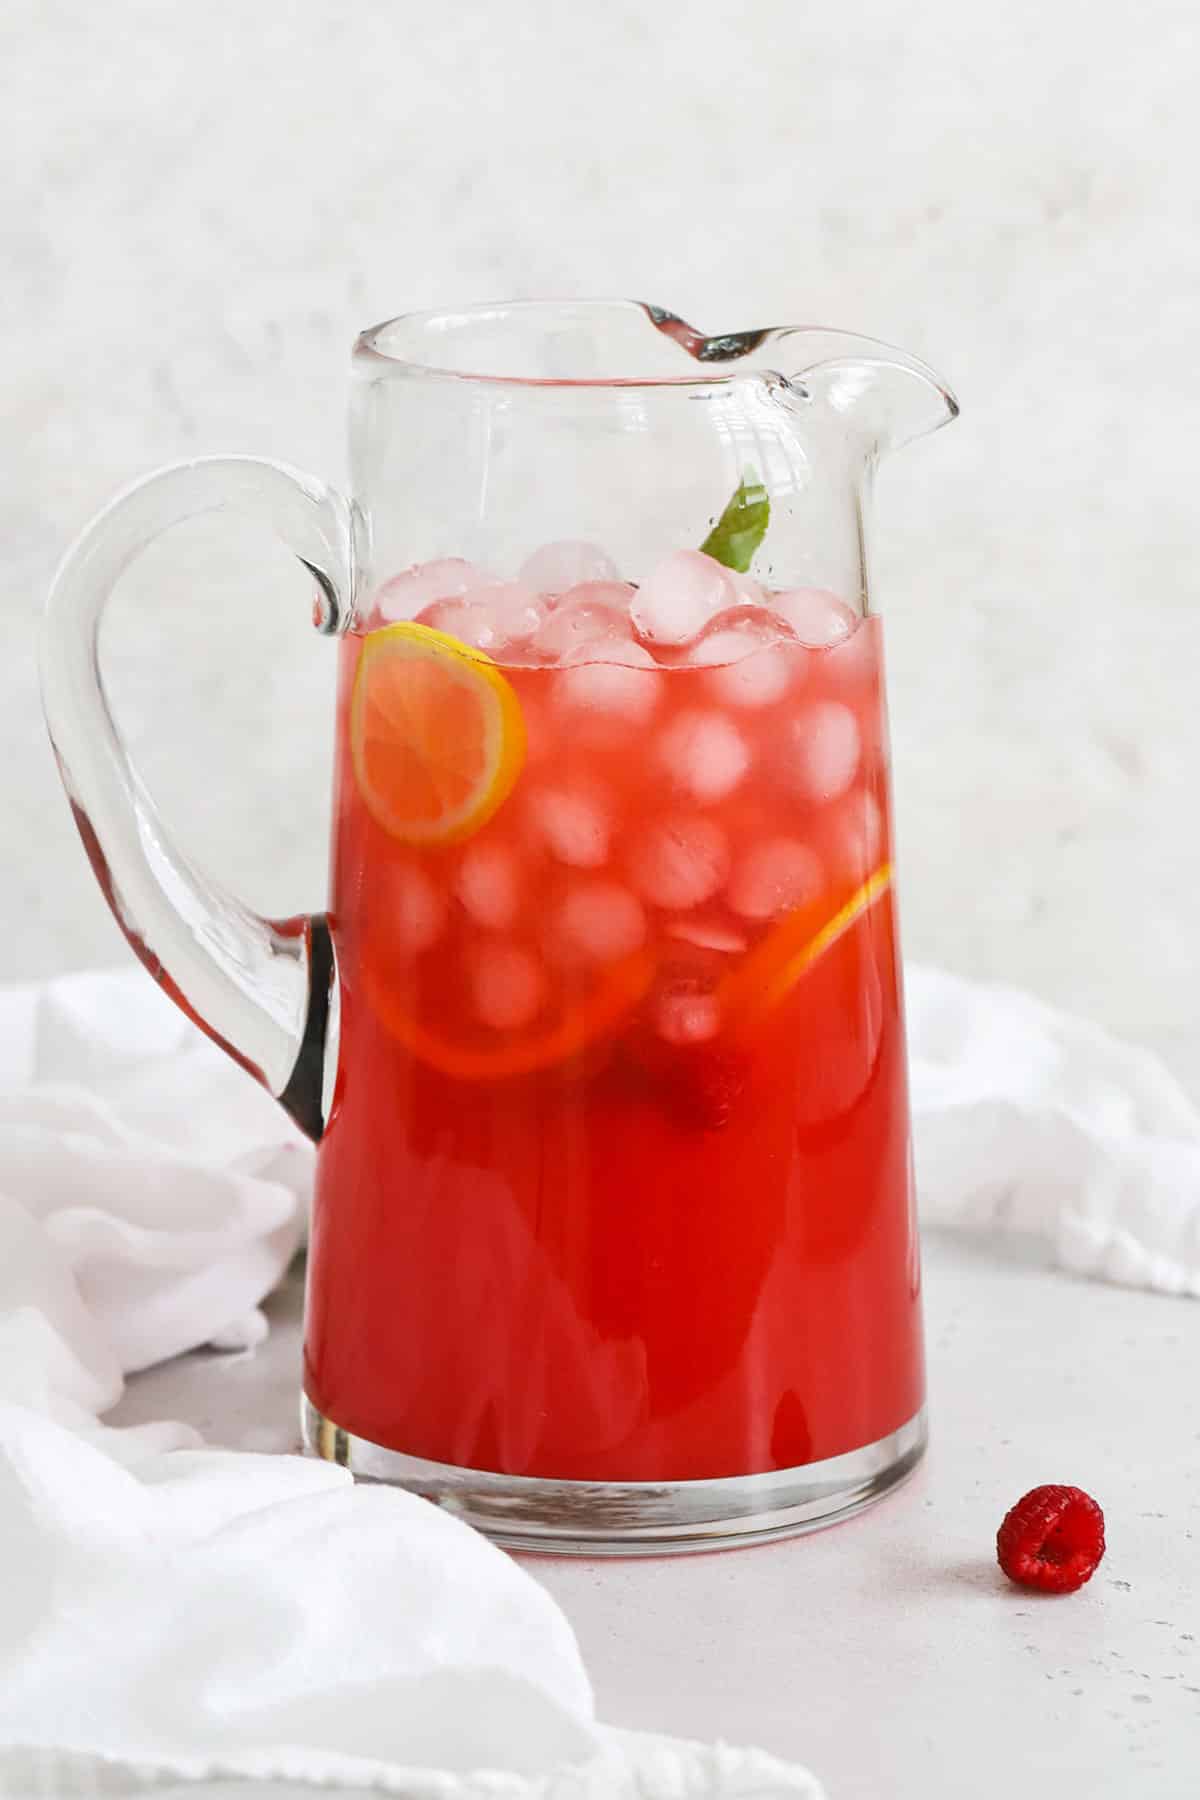 A glass pitcher of bright pink raspberry lemonade